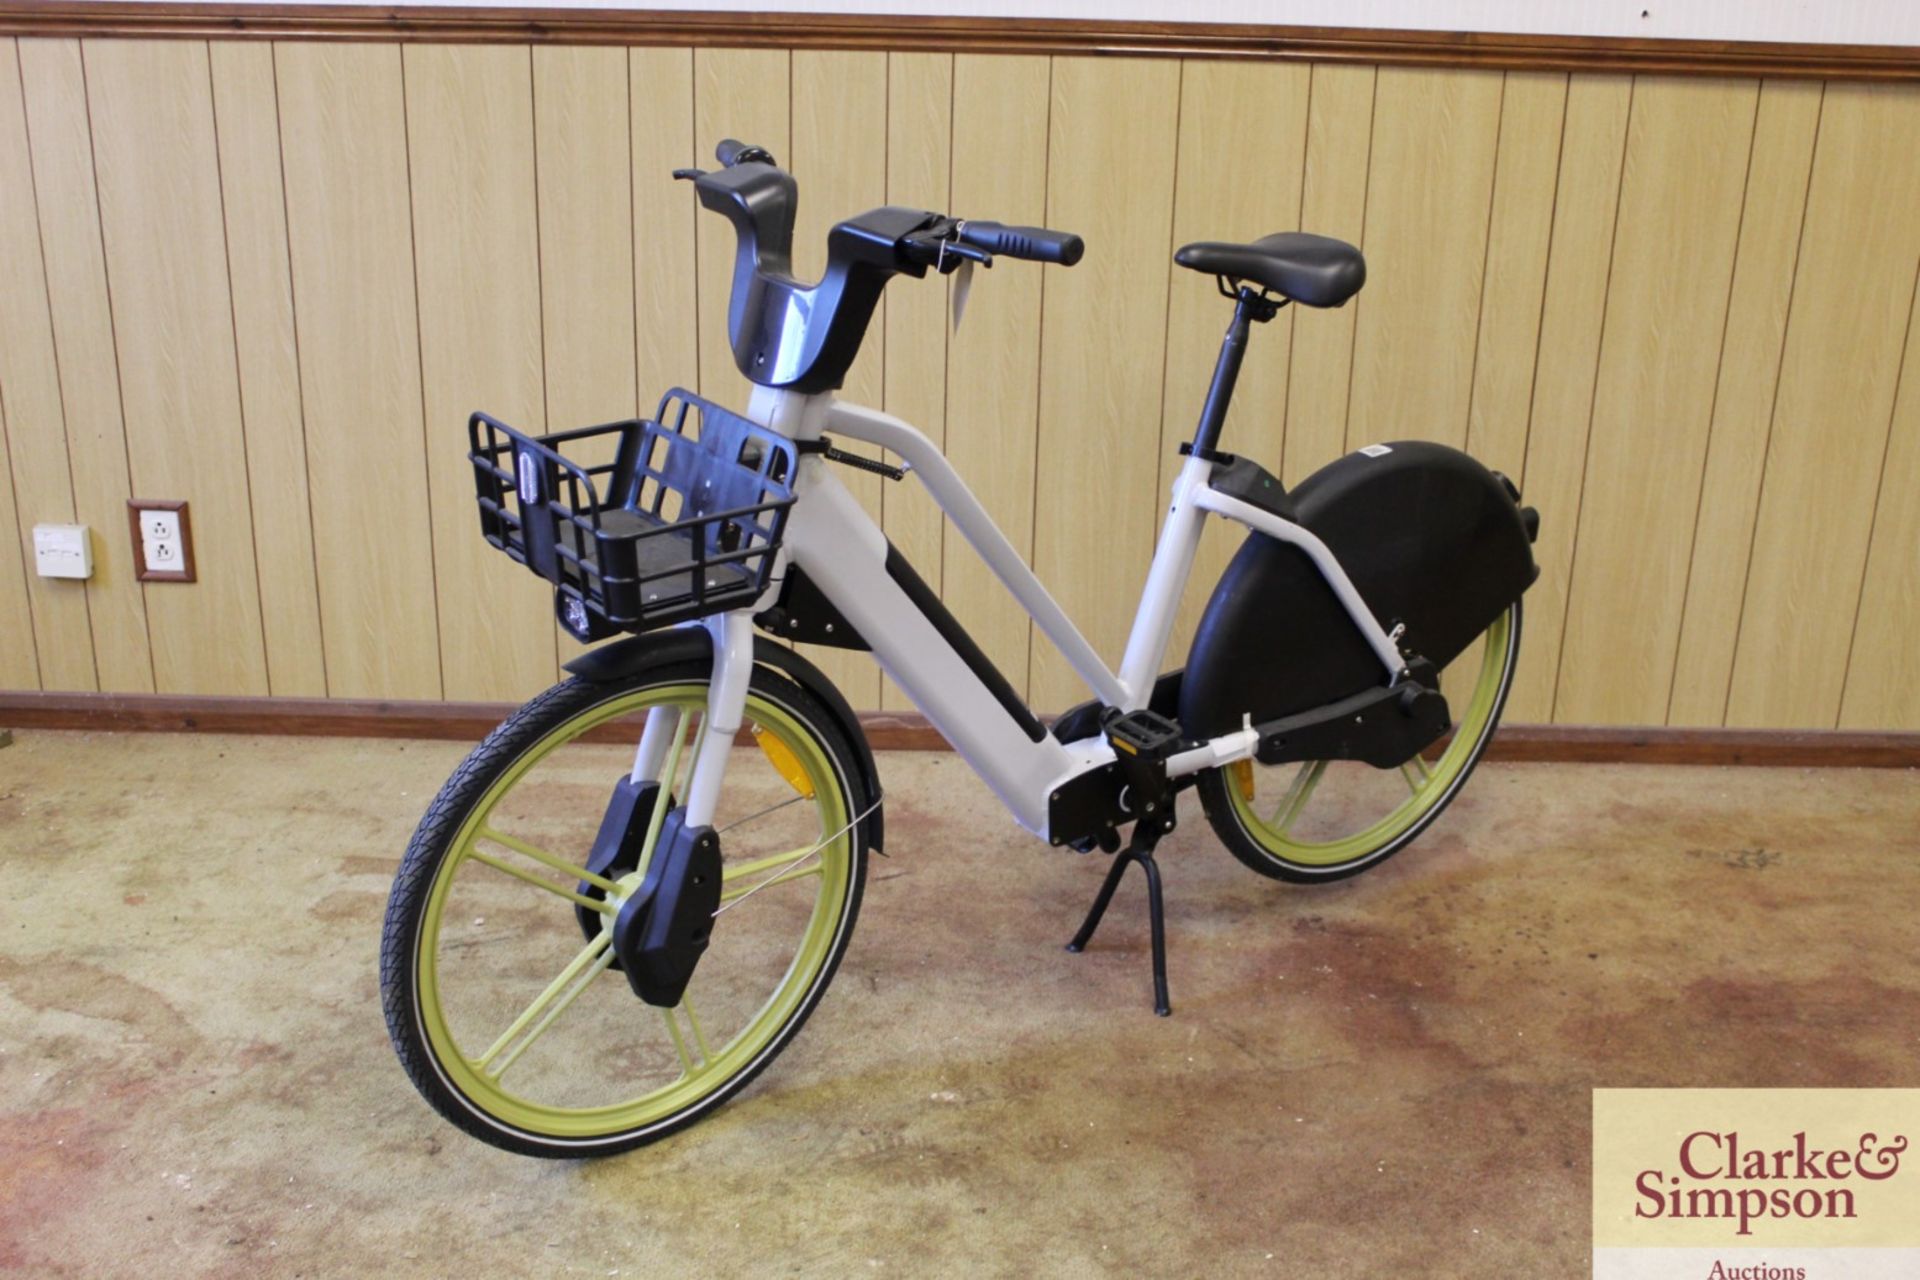 **CATALOGUE CHANGE** Acton Nexus Rideshare e-bike. No charger. Requires a Rideshare type